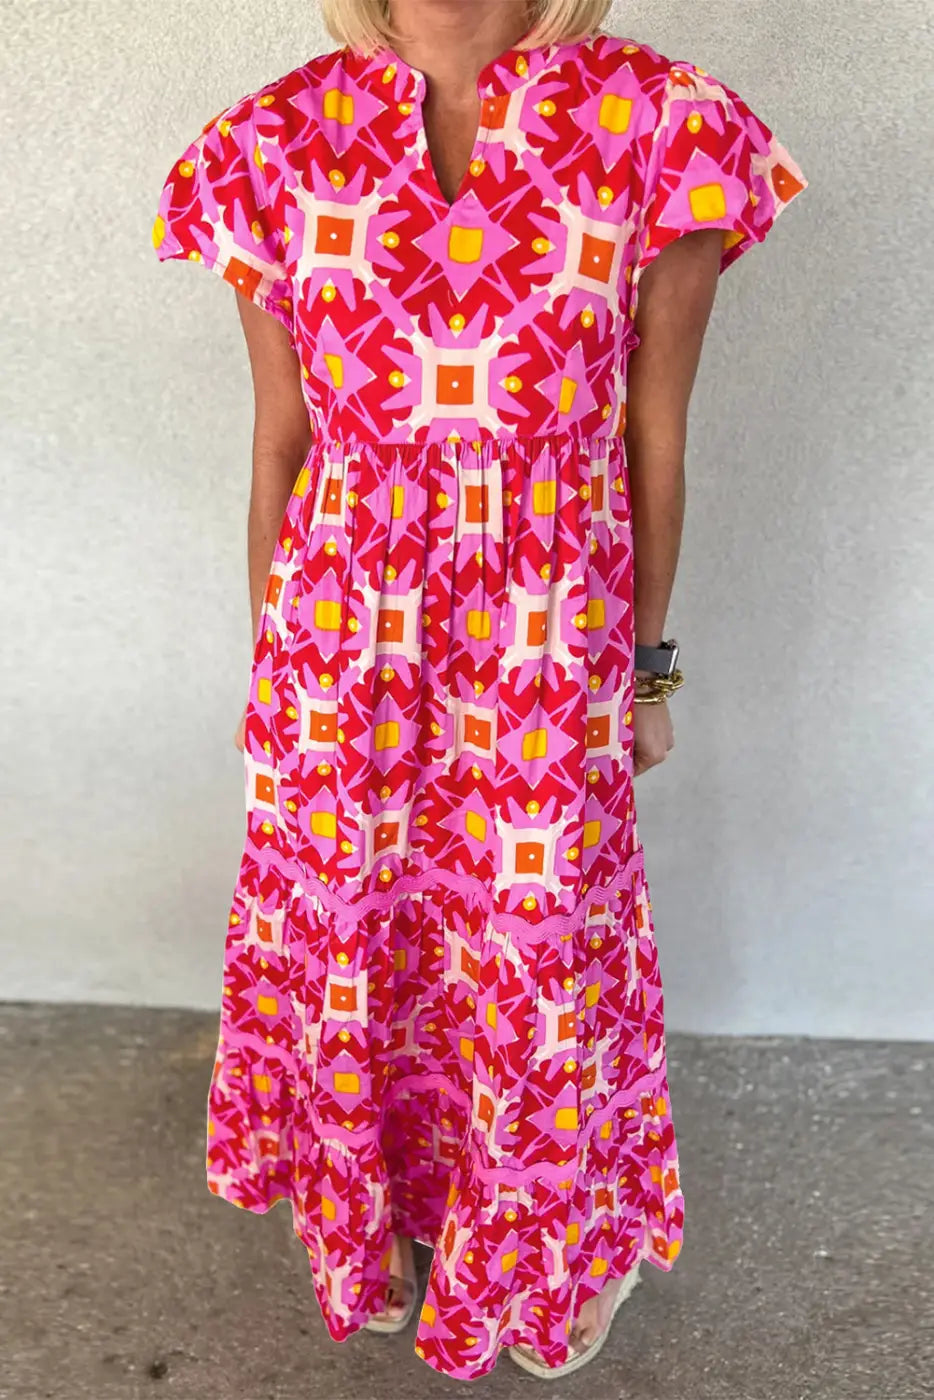 Strawberry maxi dress - pink geo print v-neck - s / 100% polyester - dresses